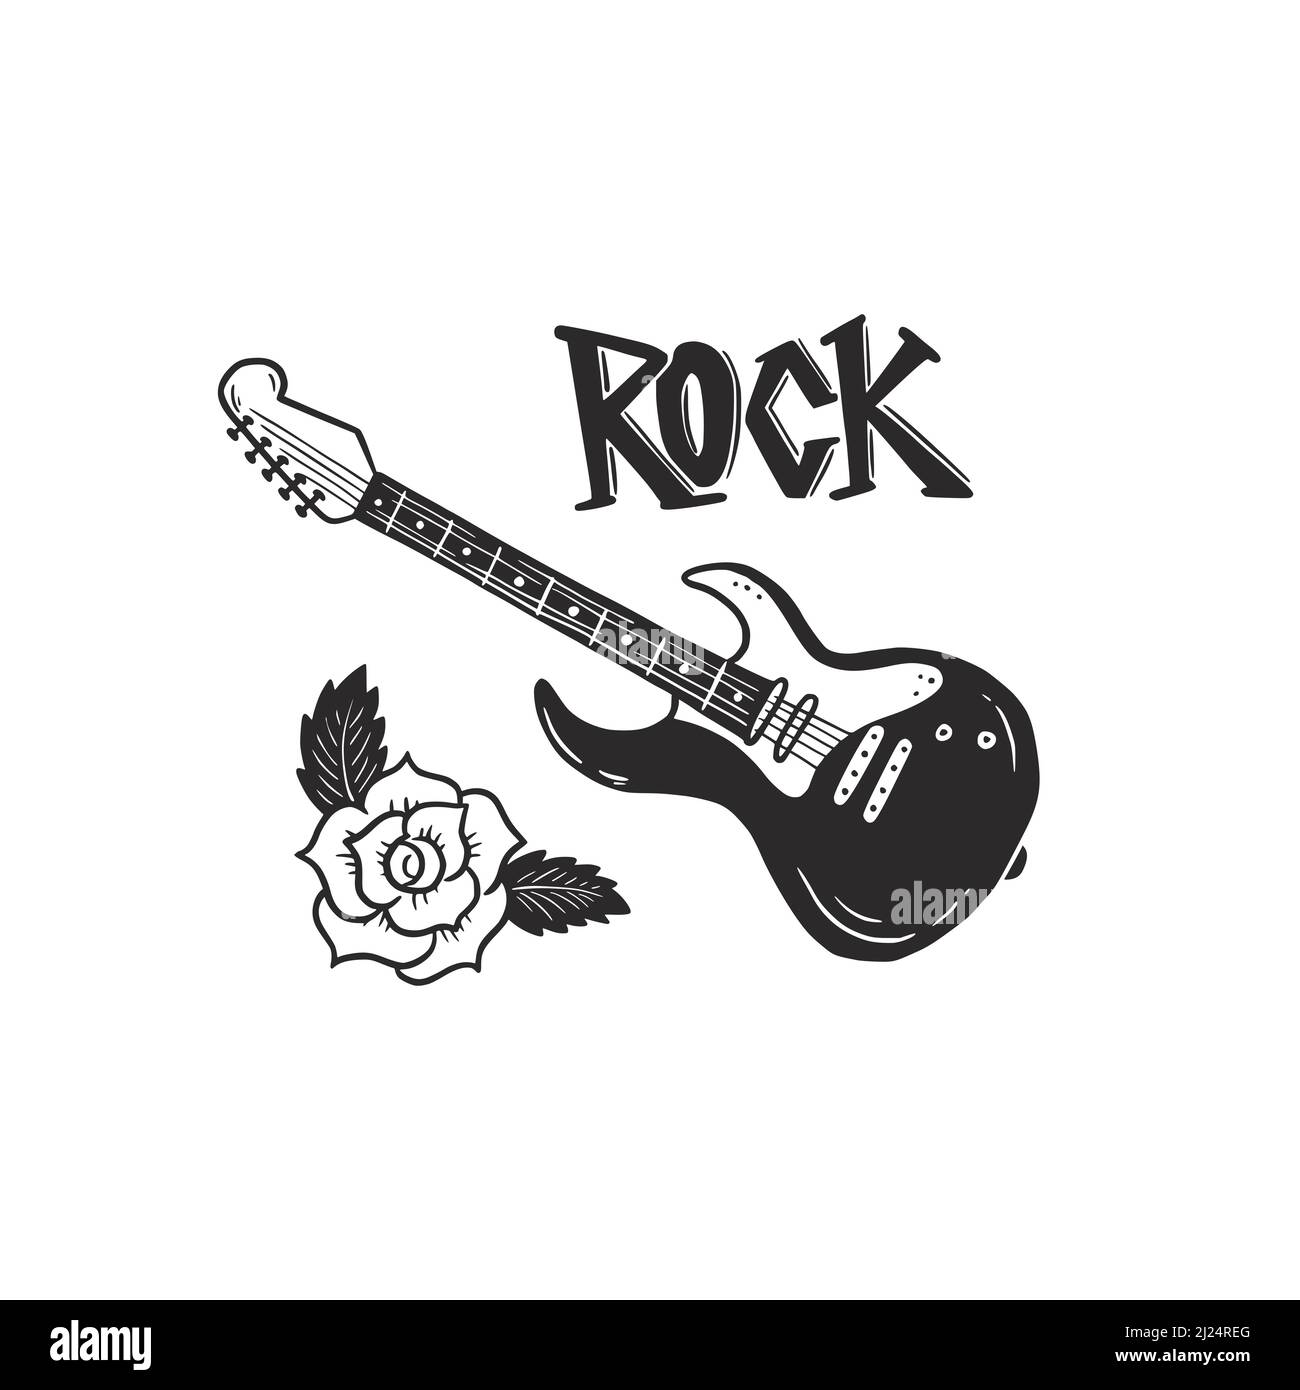 Chitarra elettrica rock and roll in stile doodle set vettoriale di